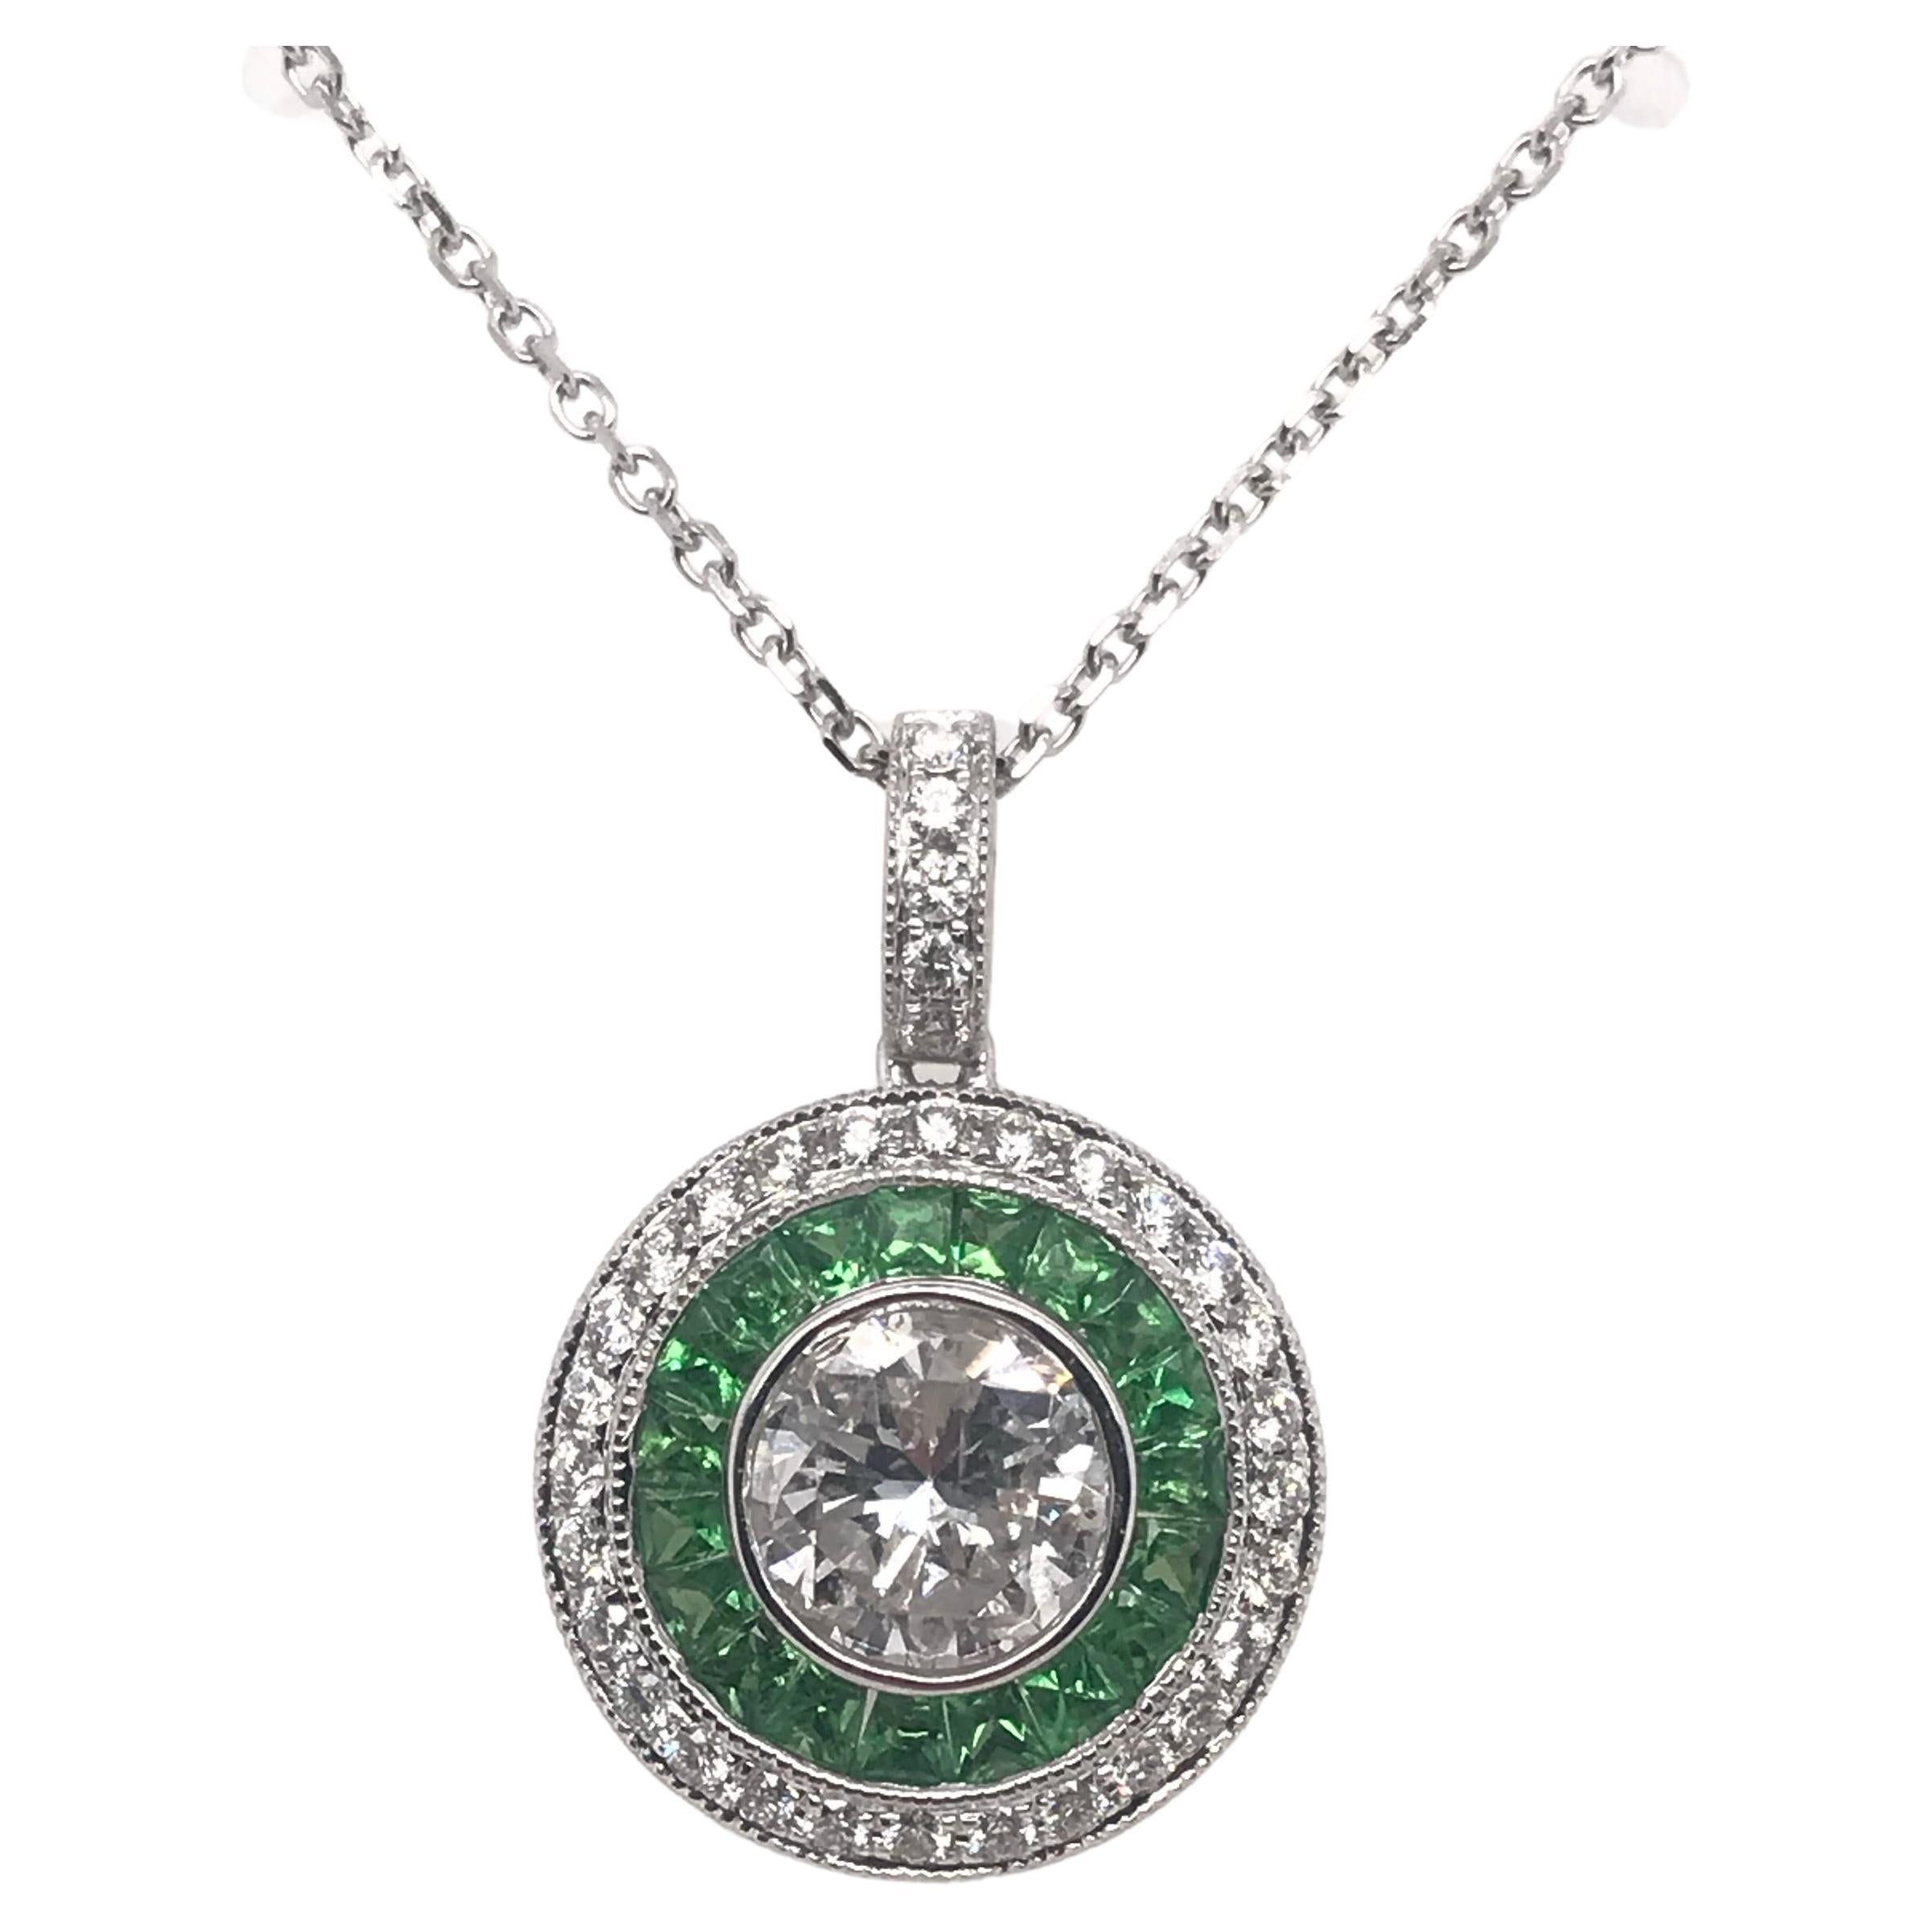 Vintage Inspired  Diamond Necklace